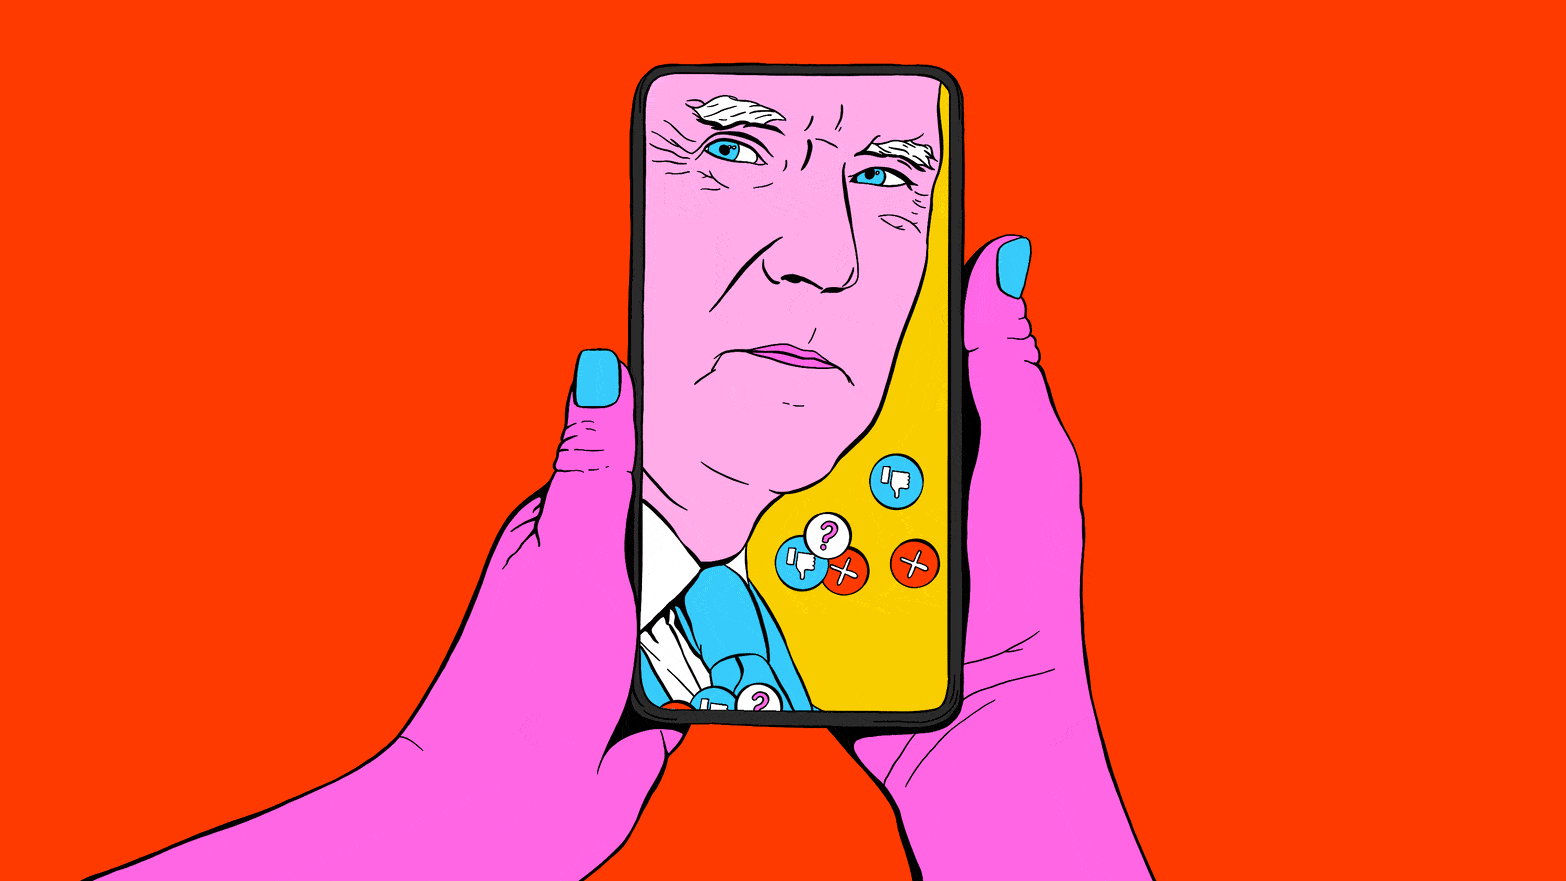 Illustrative gif of Joe Biden in a cellphone